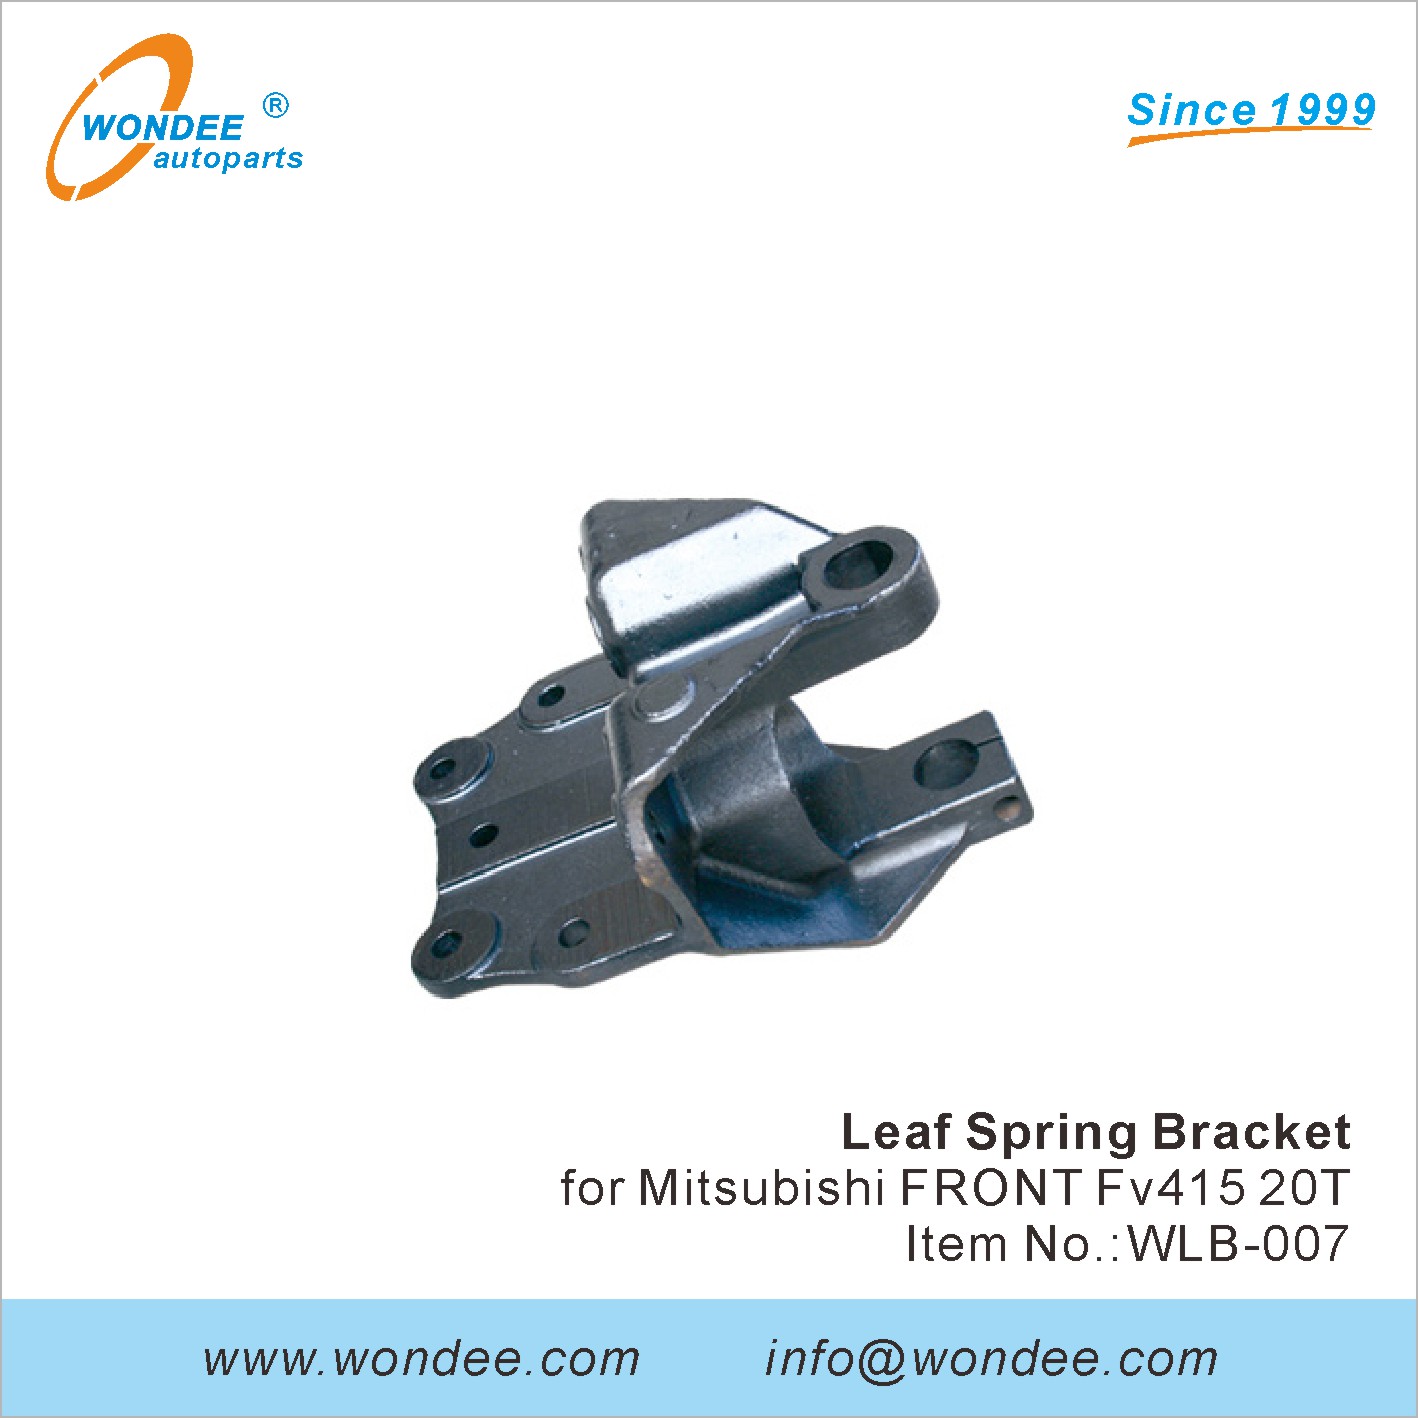 WONDEE leaf spring bracket (7)